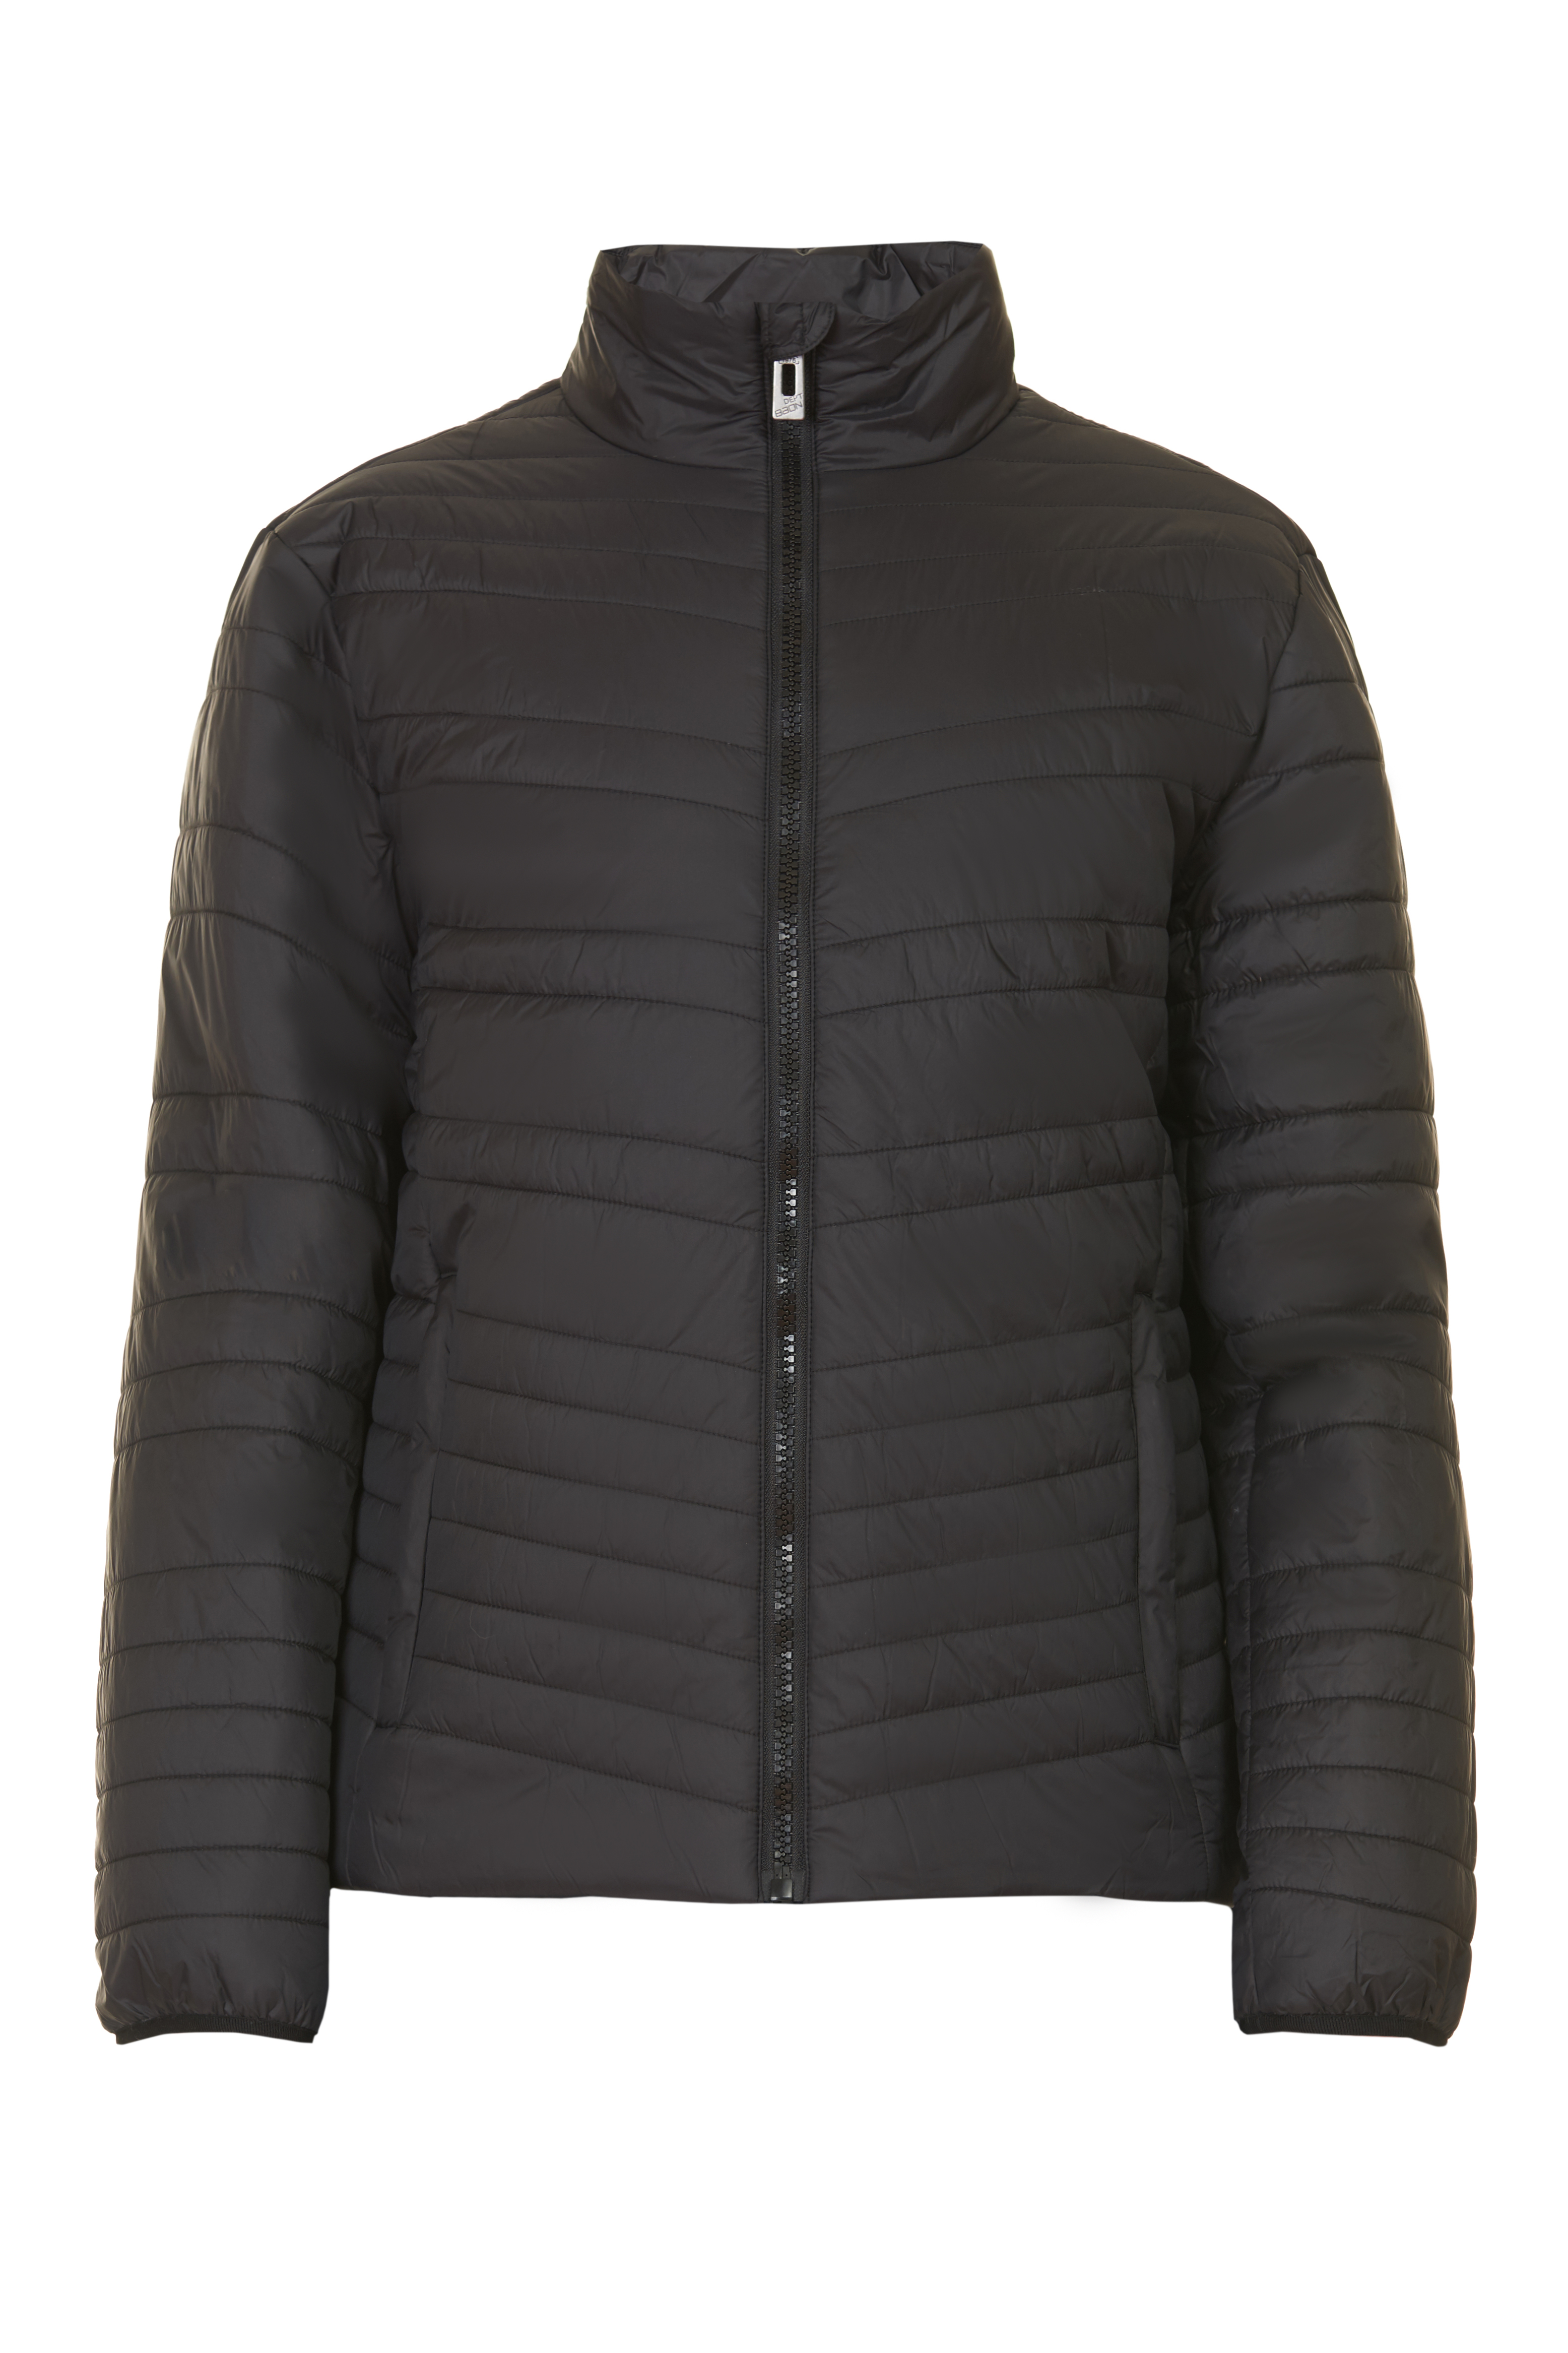 Куртка с наклонной простёжкой (арт. baon B537522), размер XXL, цвет черный Куртка с наклонной простёжкой (арт. baon B537522) - фото 3